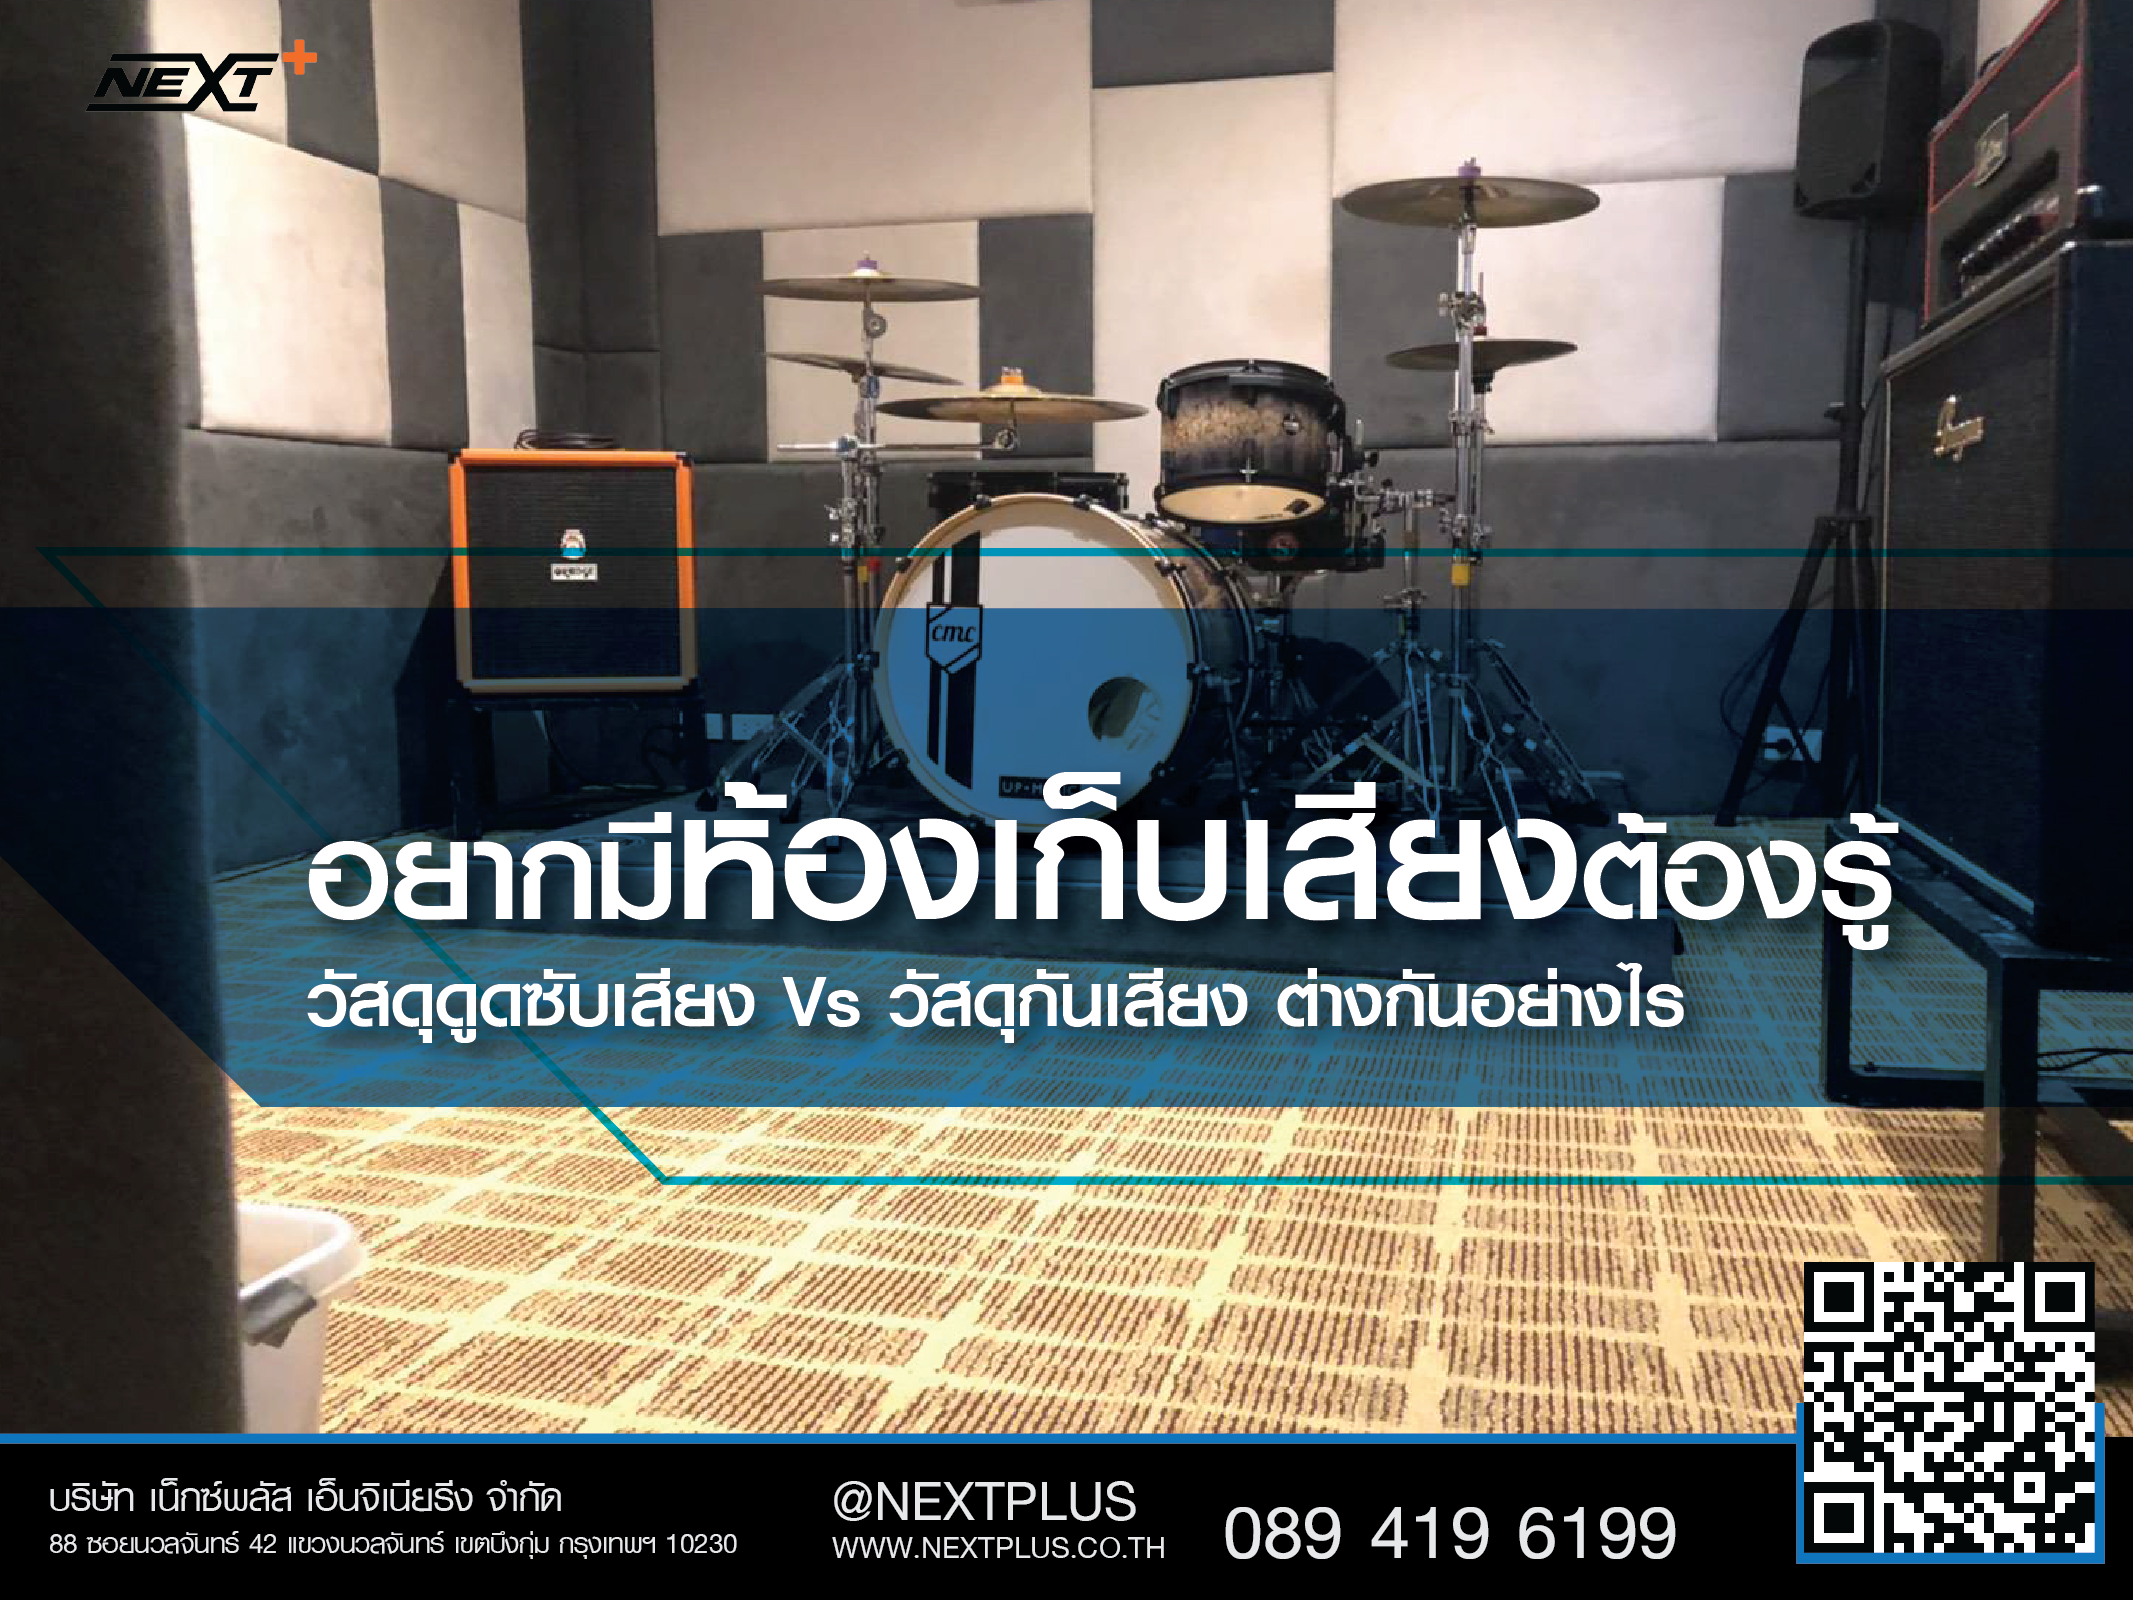 Soundproof room - Sound Absorbing Vs. Soundproof Materials - Next Plus Engineering-03-03